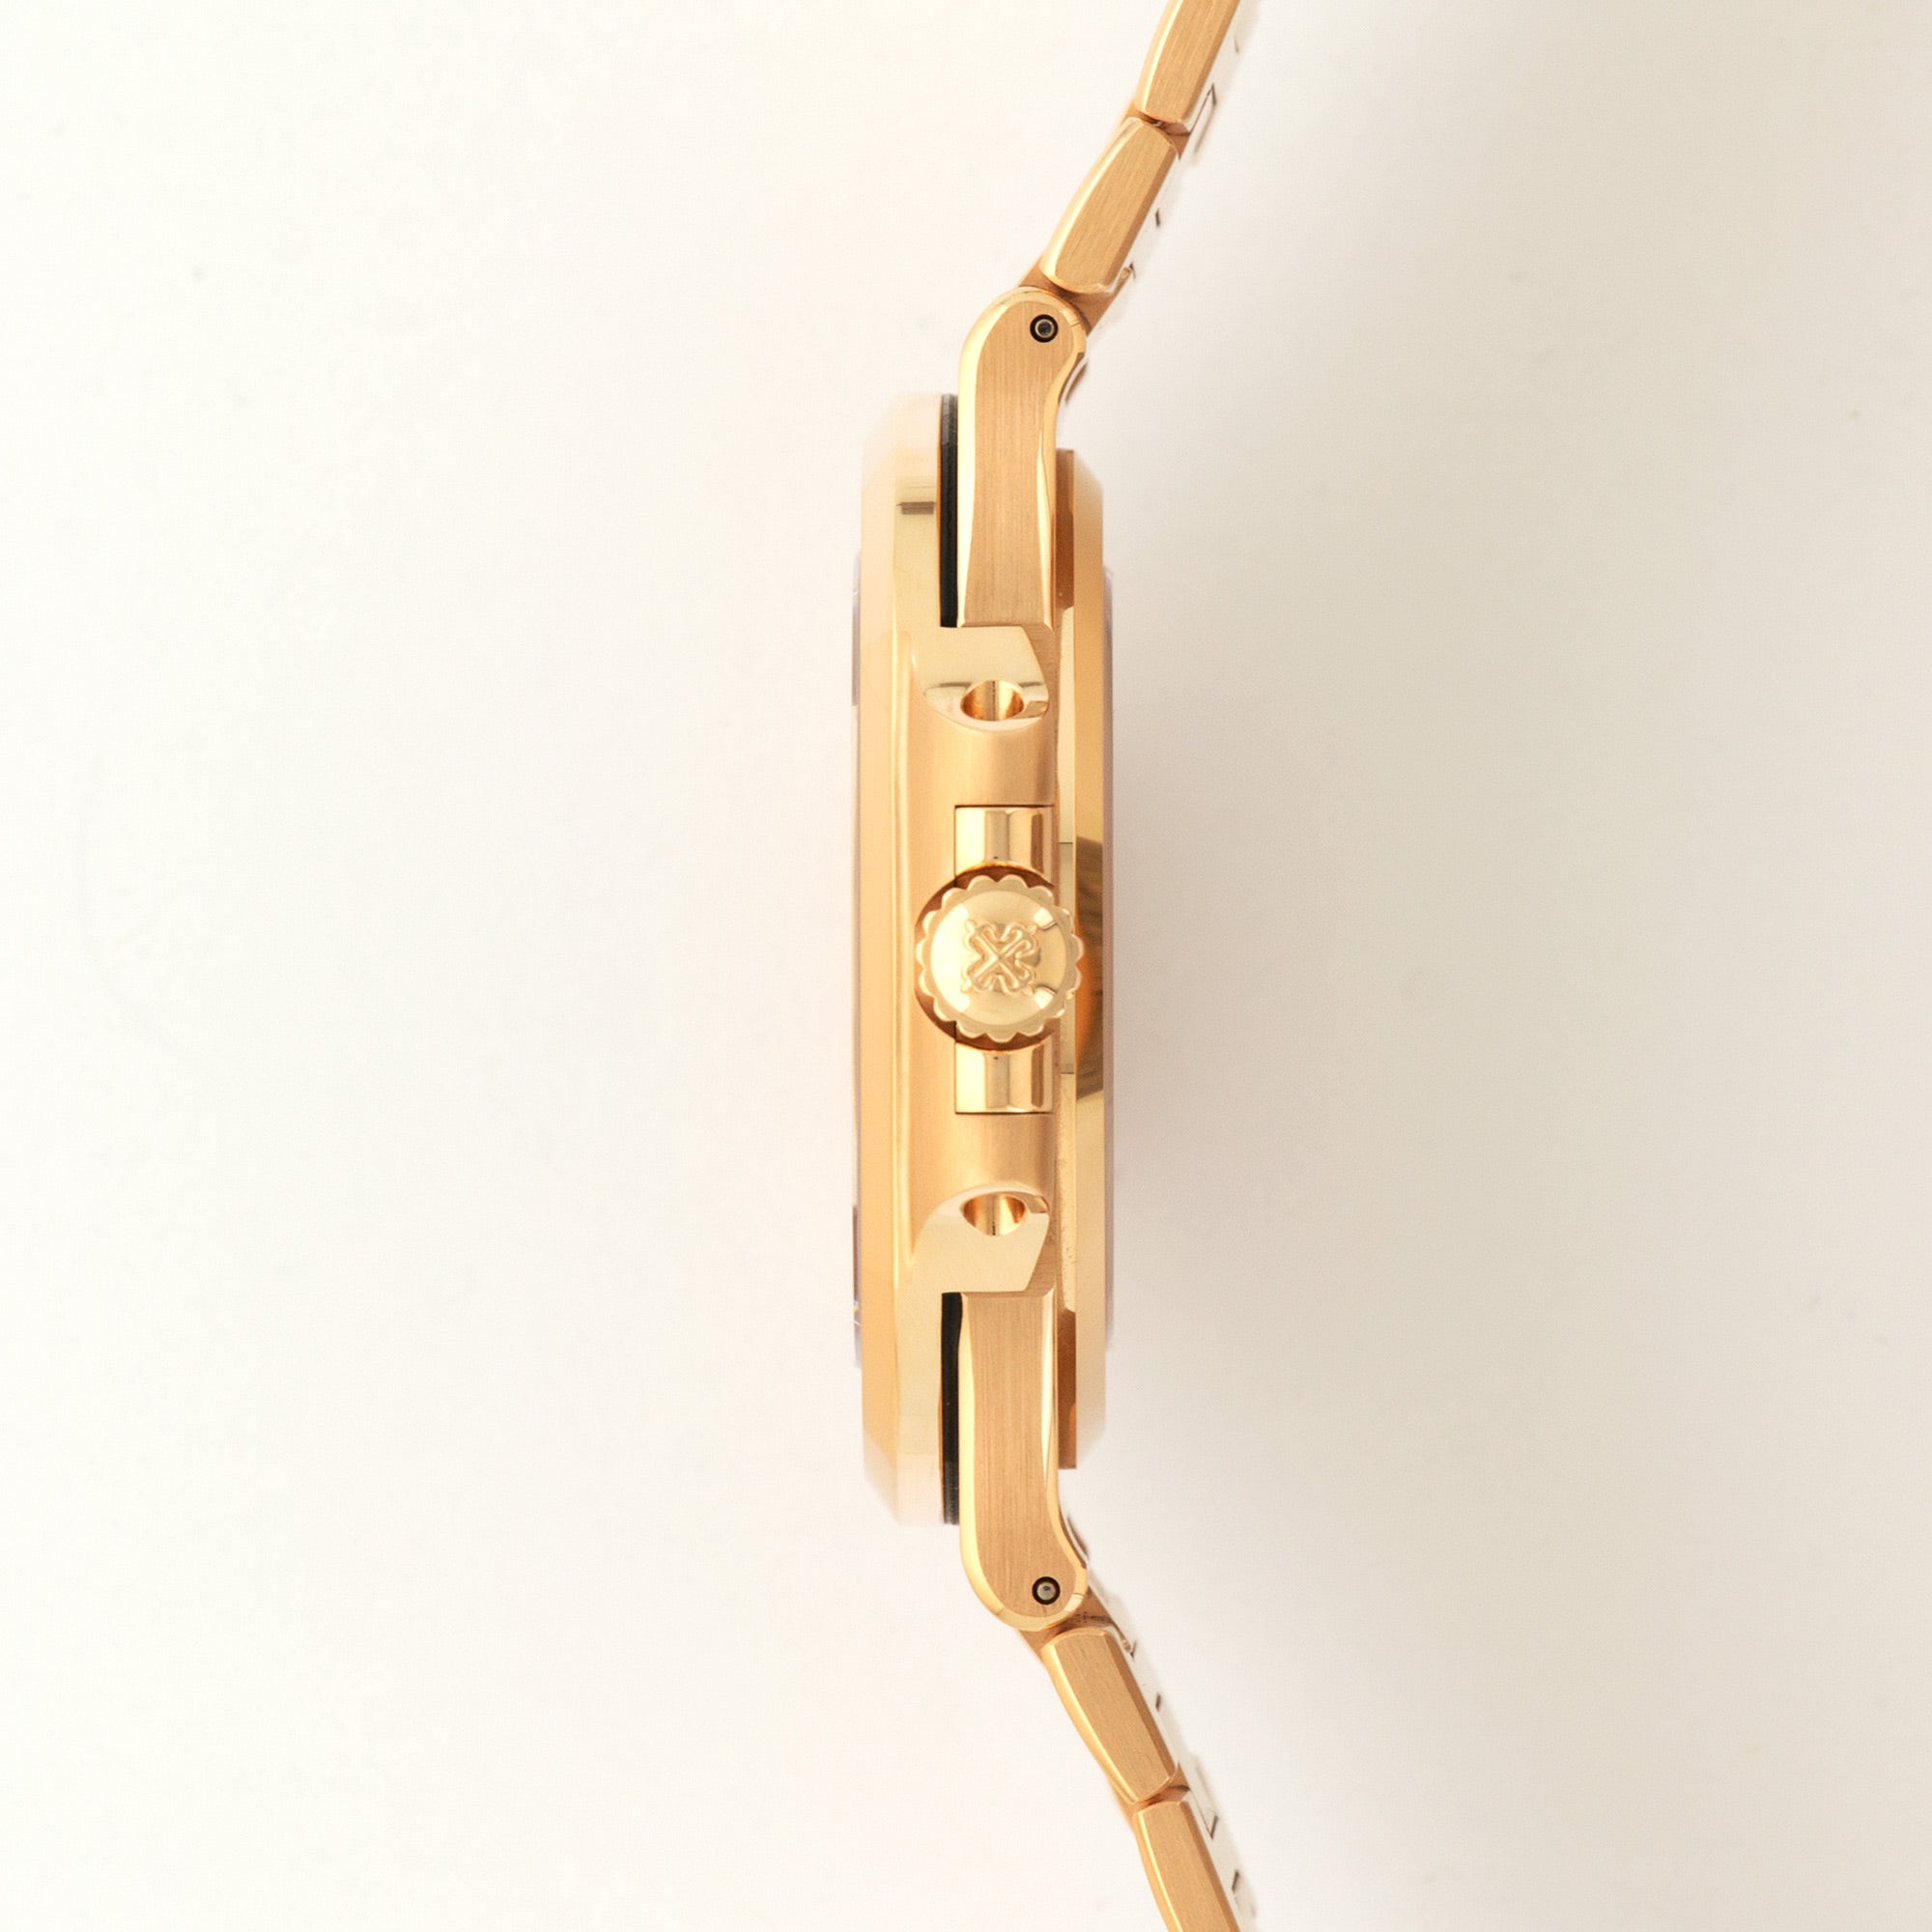 Patek Philippe - Patek Philippe Rose Gold Nautilus Tiffany &amp; Co. Watch Ref. 5711 - The Keystone Watches